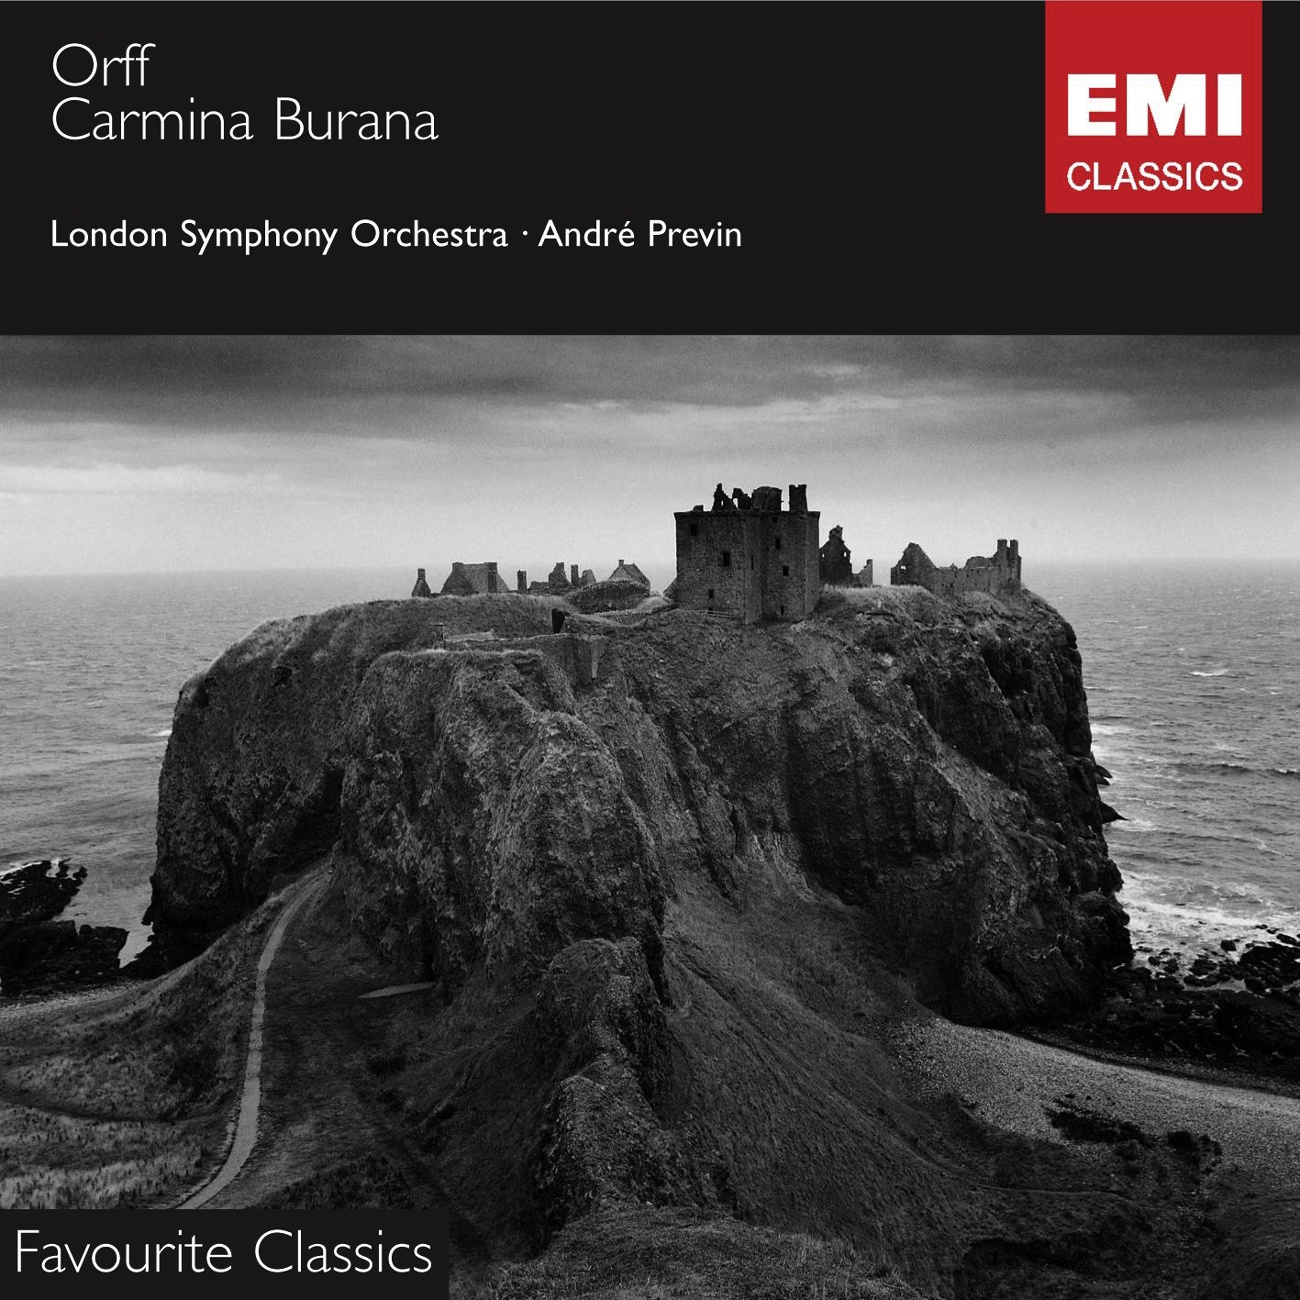 Carmina Burana - Cantiones profanae (1997 Digital Remaster), II - In taberna: No. 14 - In taberna quando sumus